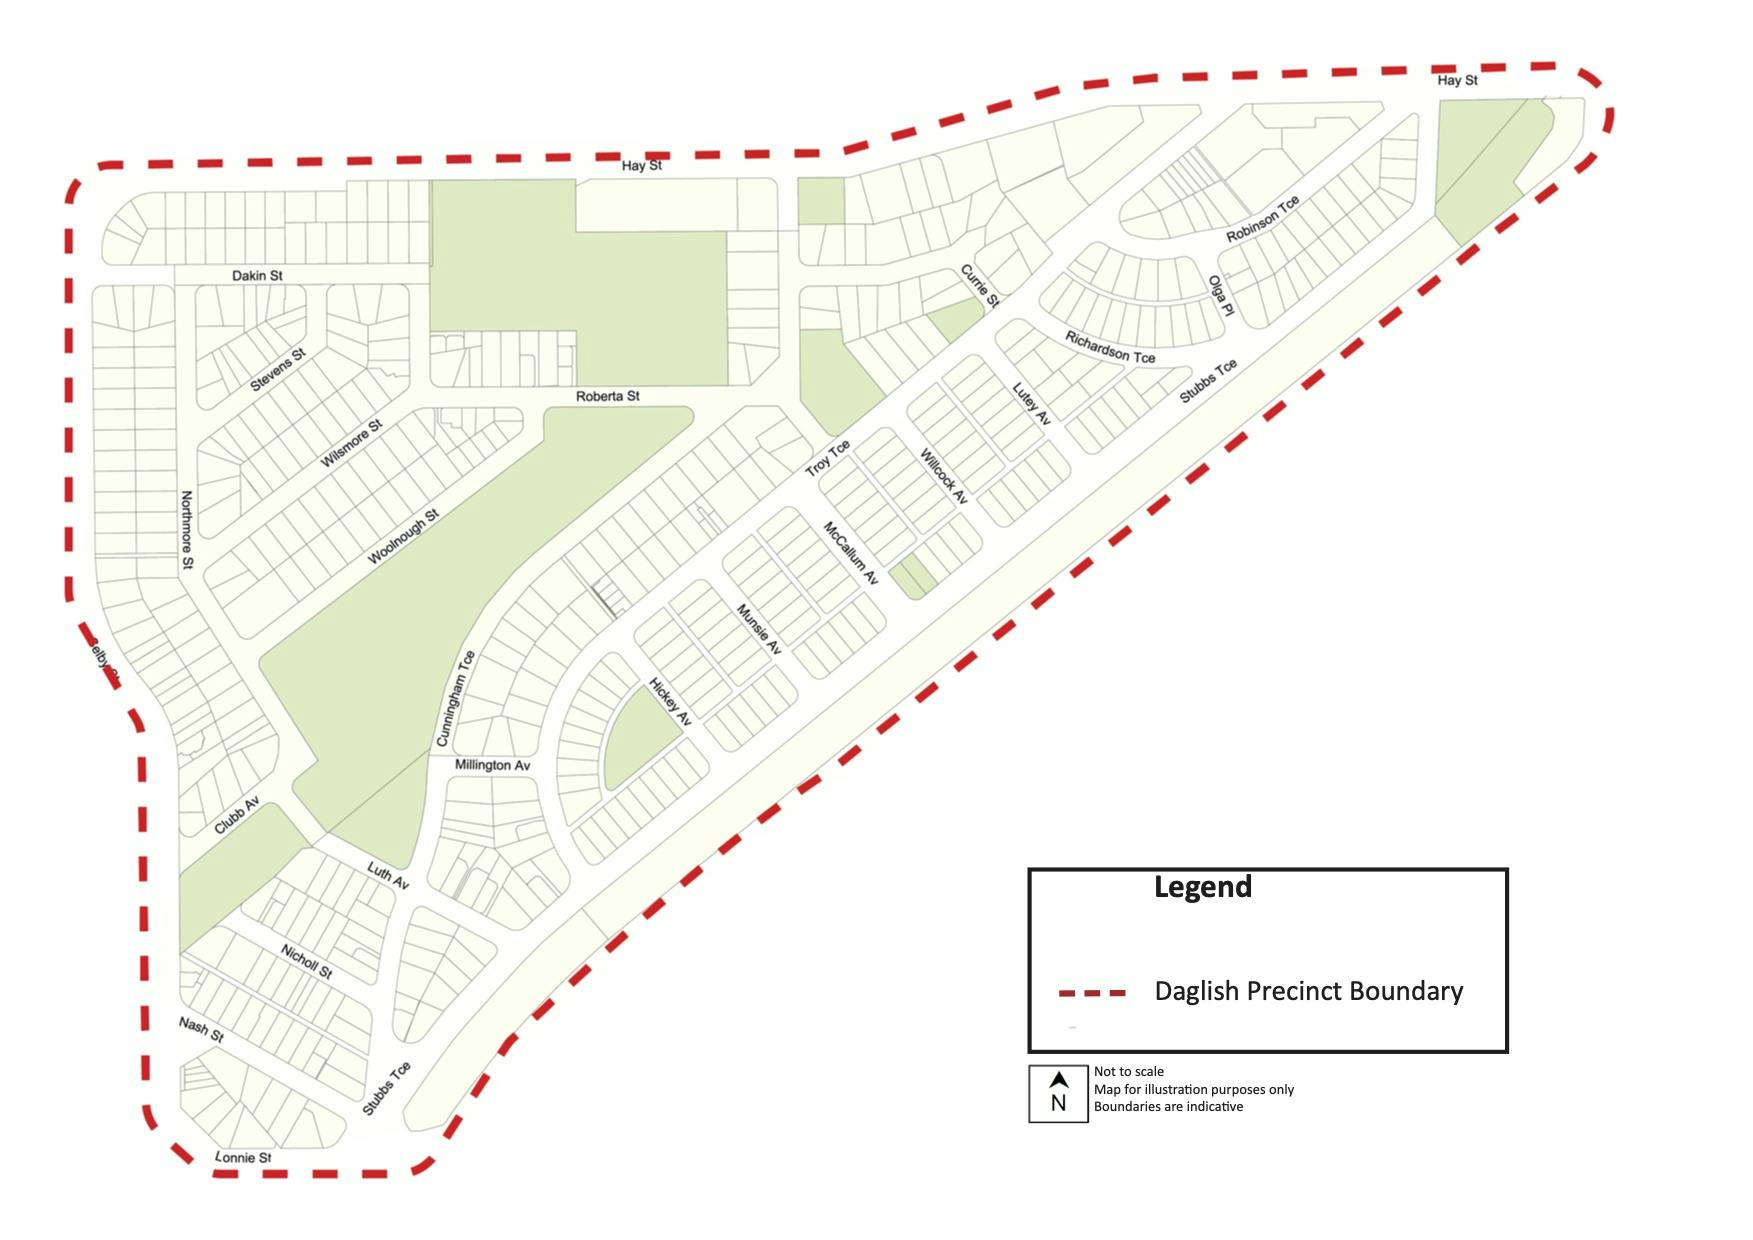 Daglish Precinct Map - Boundary